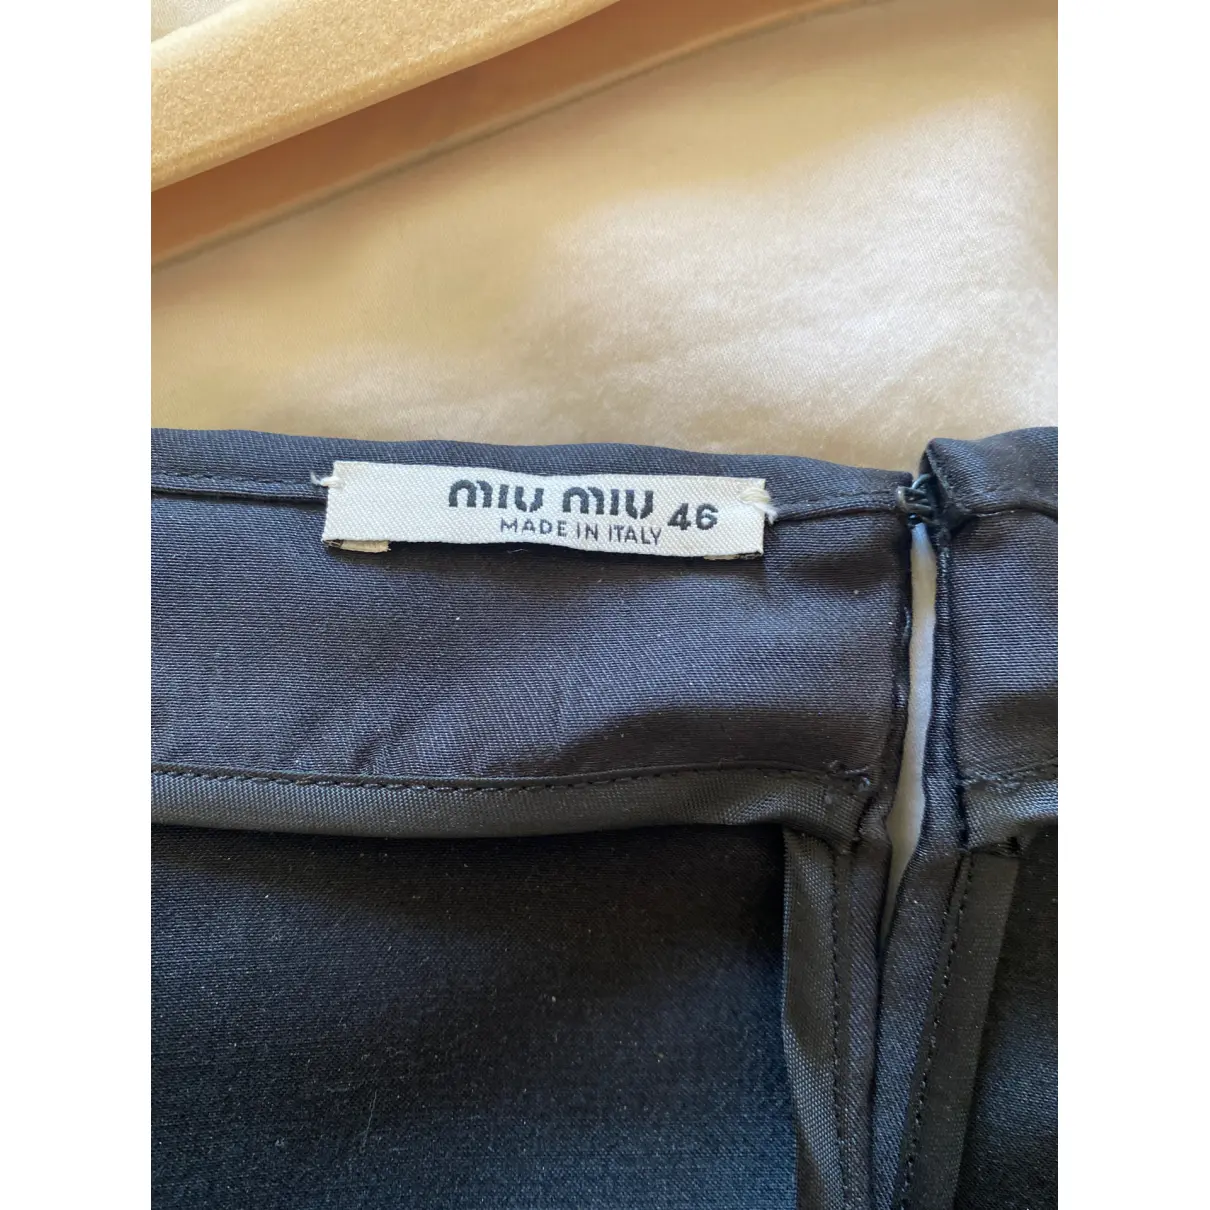 Buy Miu Miu Silk mid-length dress online